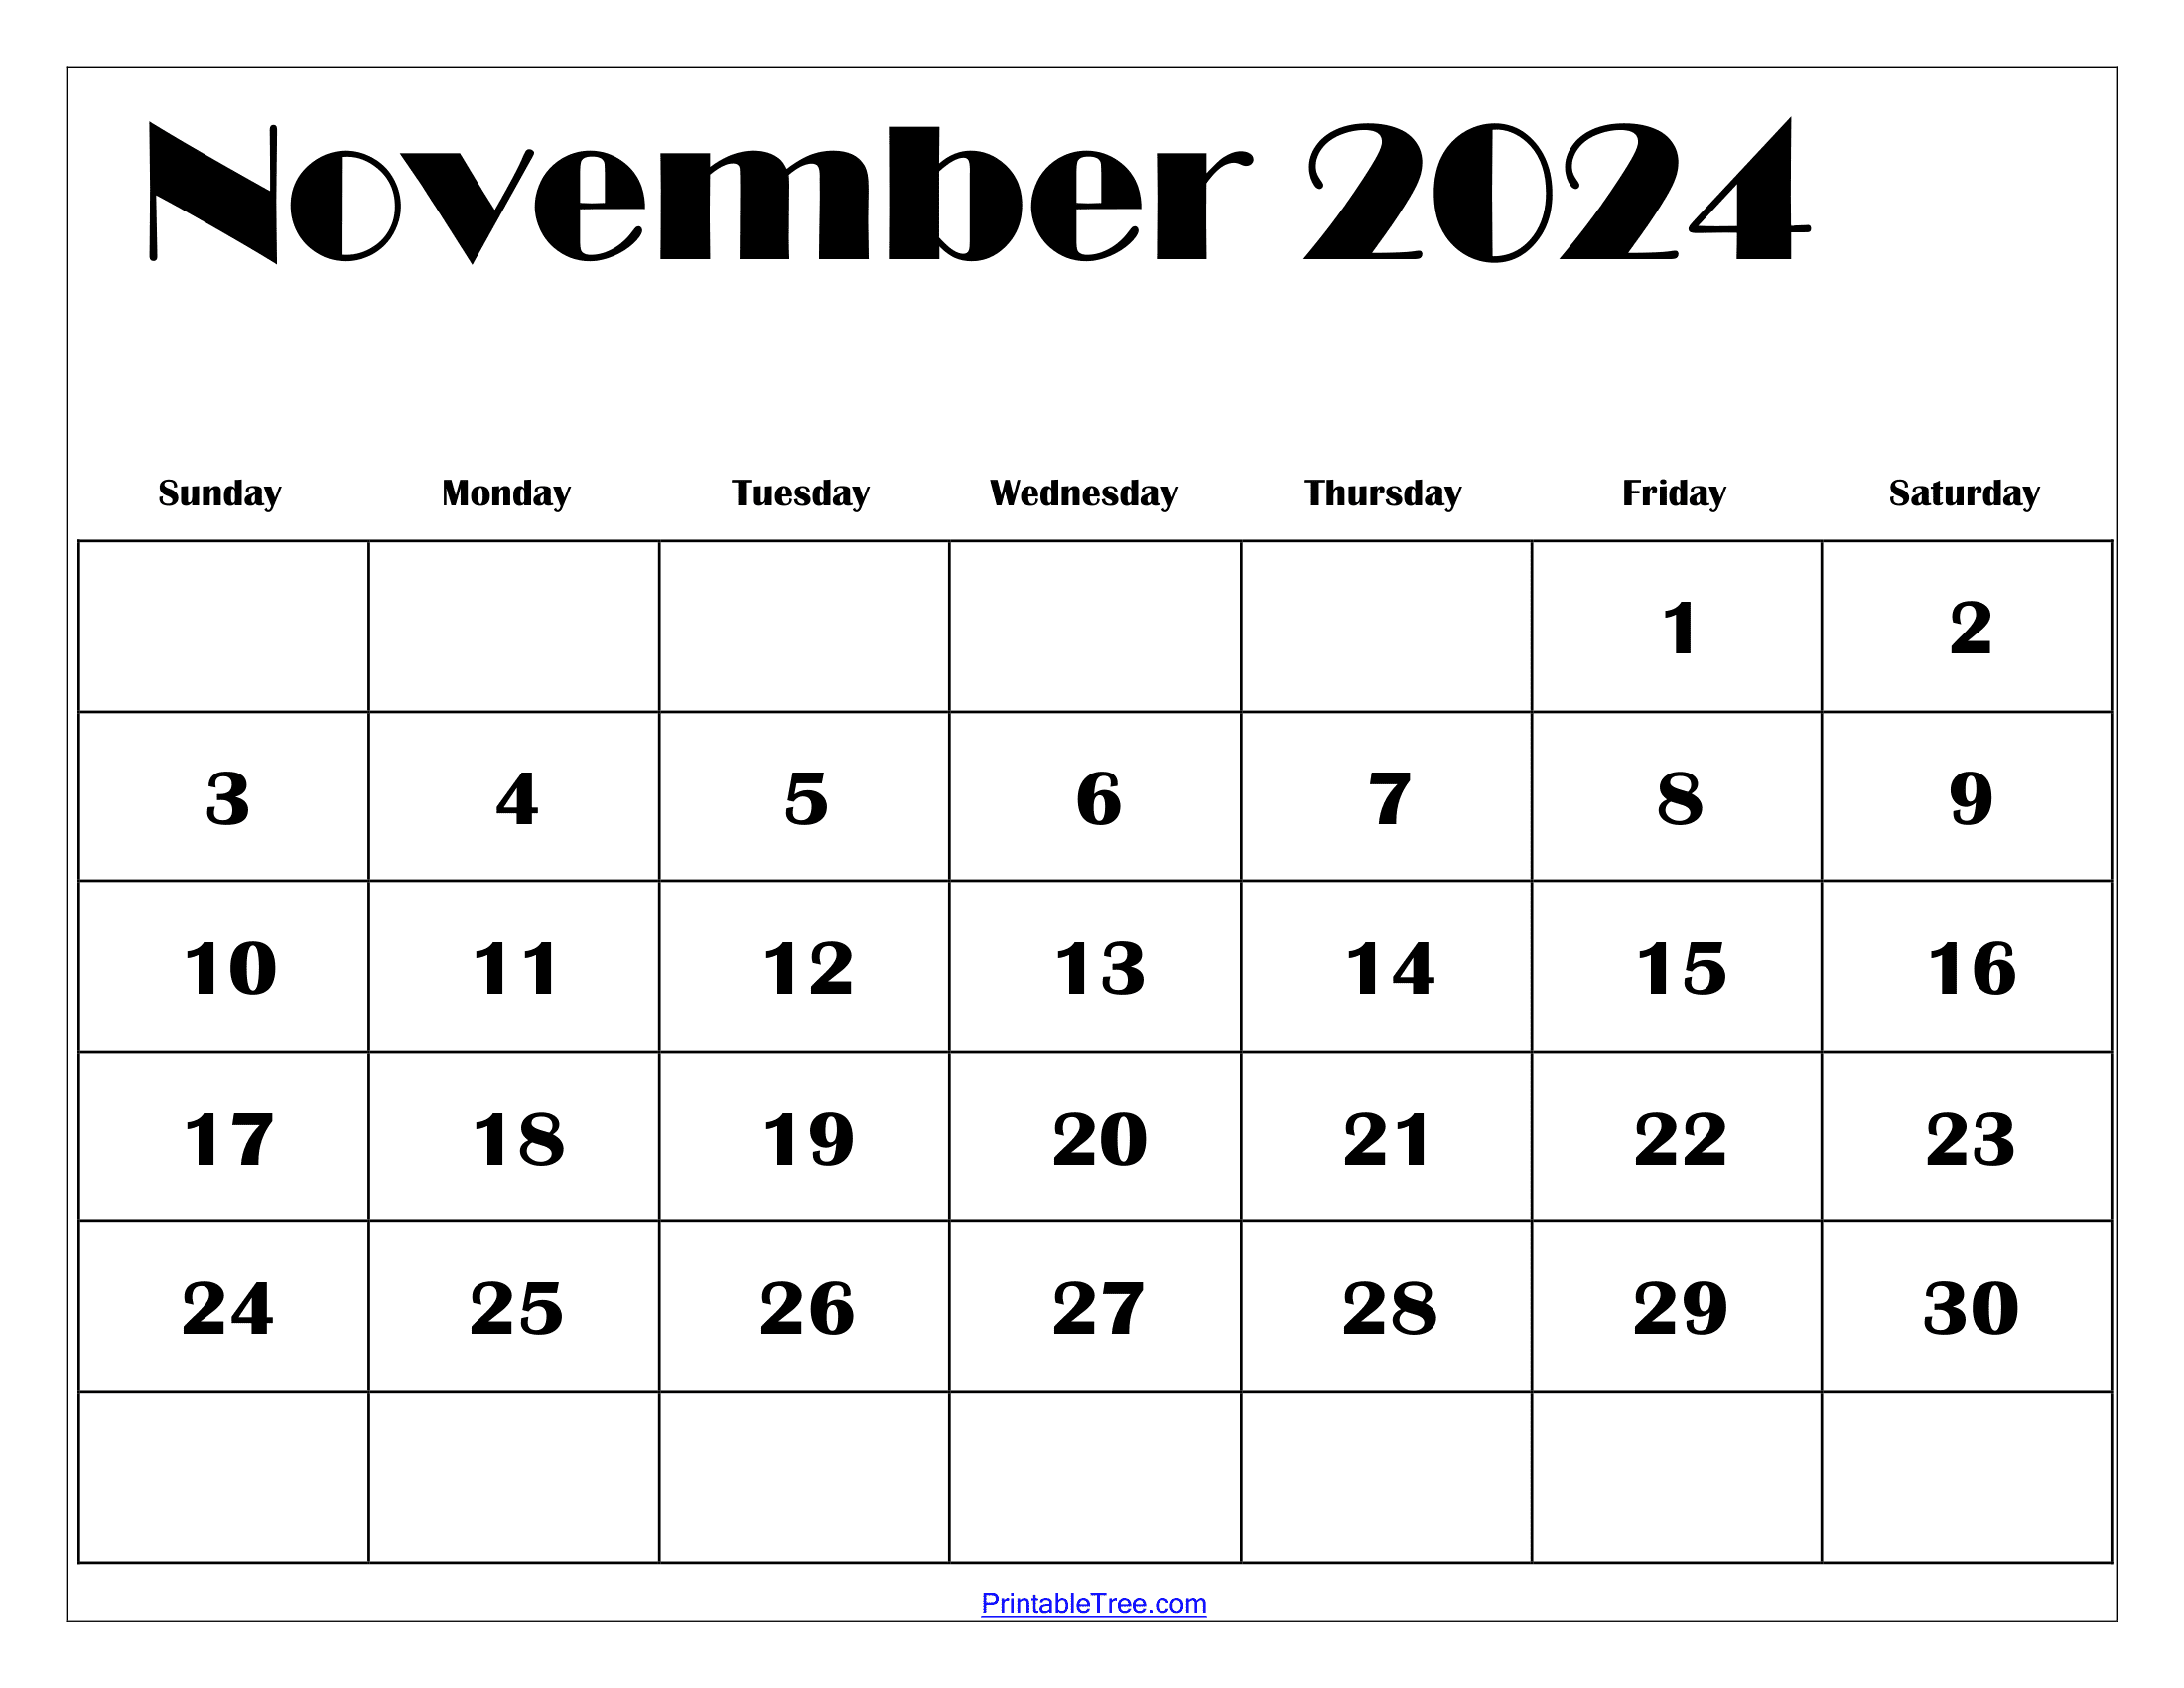 November 2024 Calendar Printable Pdf Template With Holidays for Printable Monthly Calendar November 2024